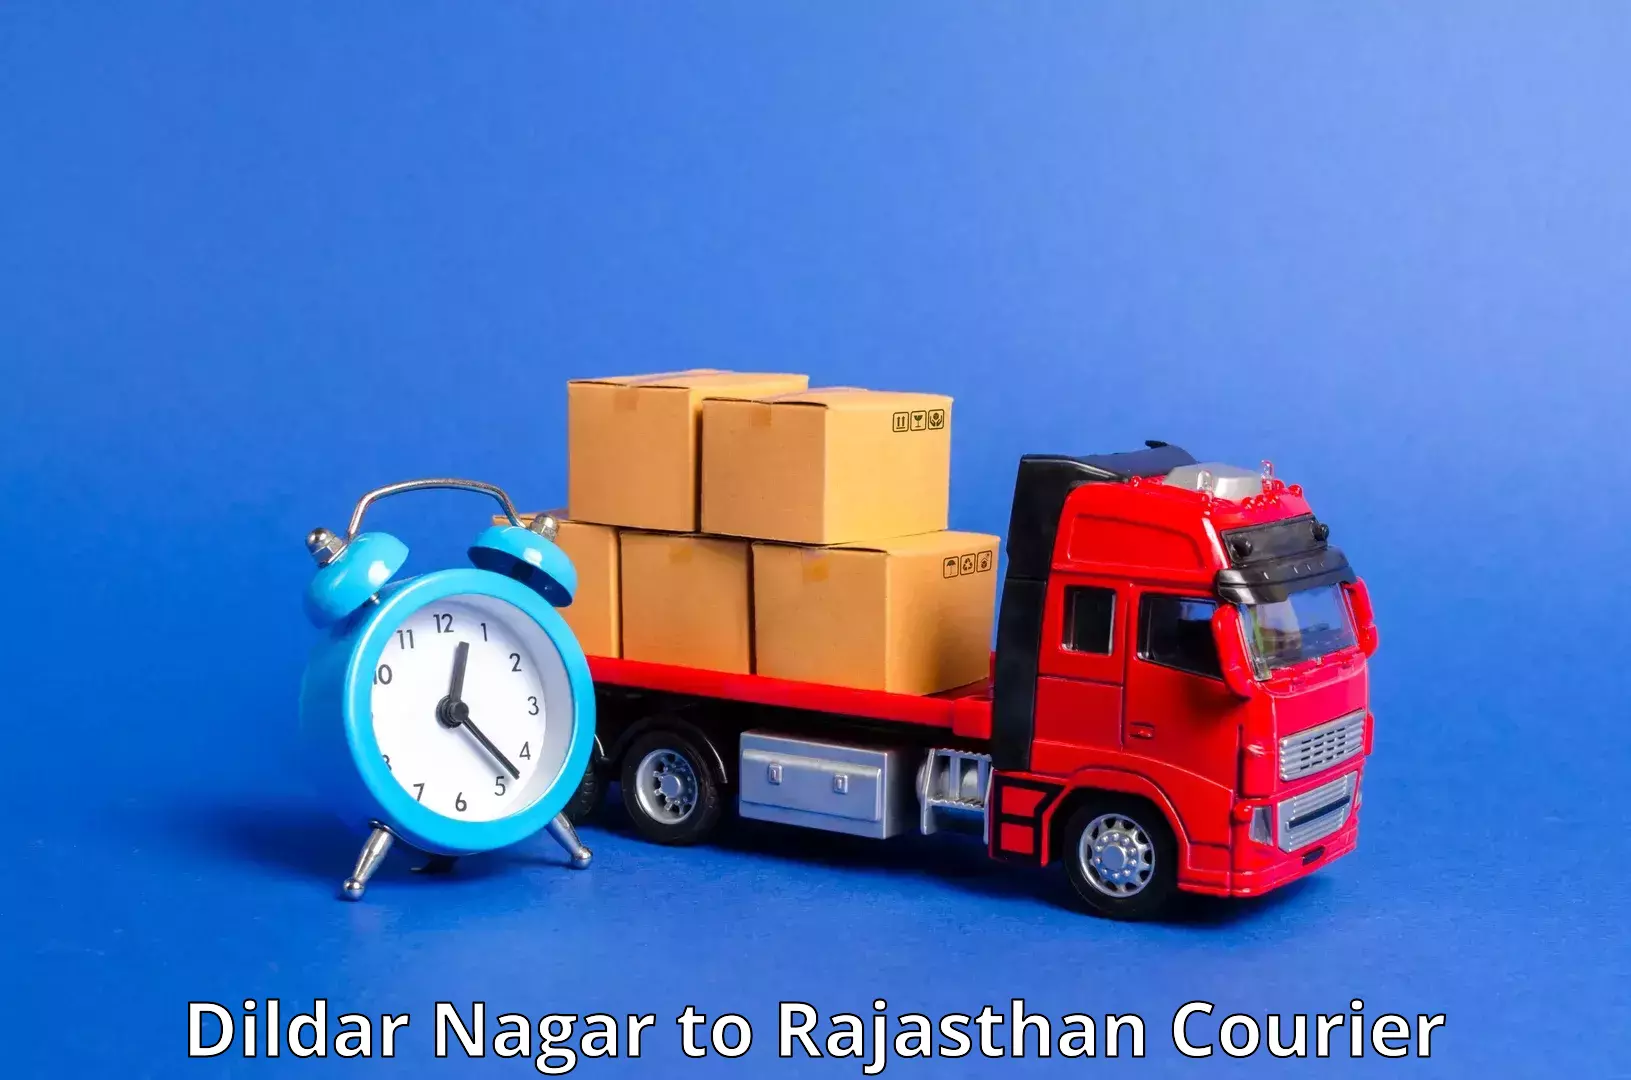 Round-the-clock parcel delivery in Dildar Nagar to Kotputli